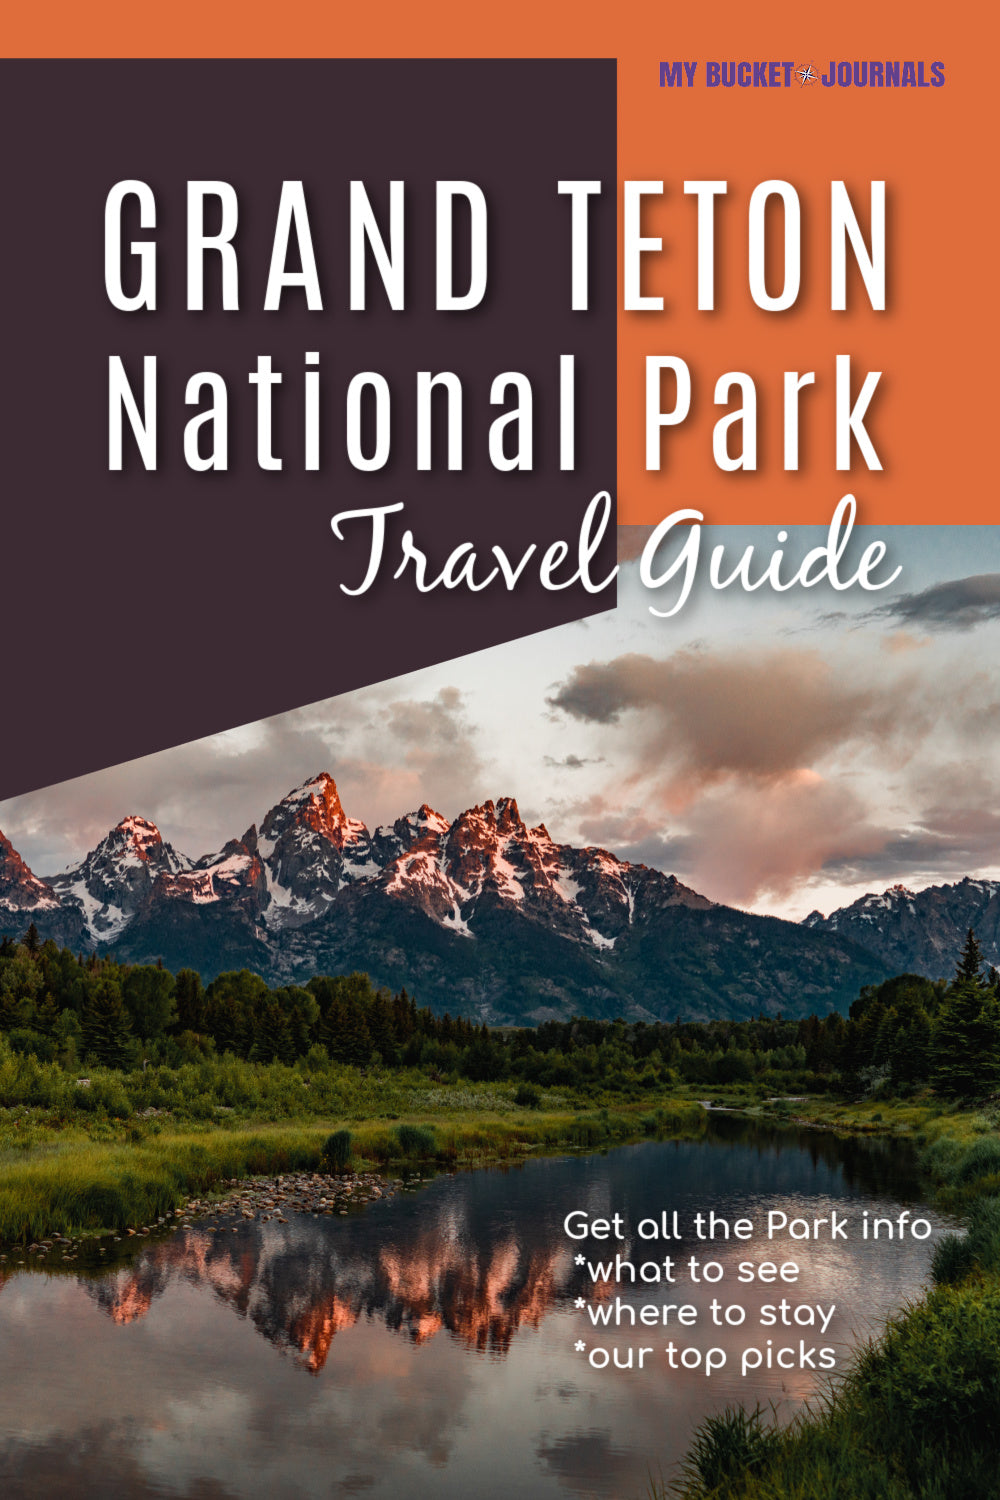 grand teton national park travel guide pin image